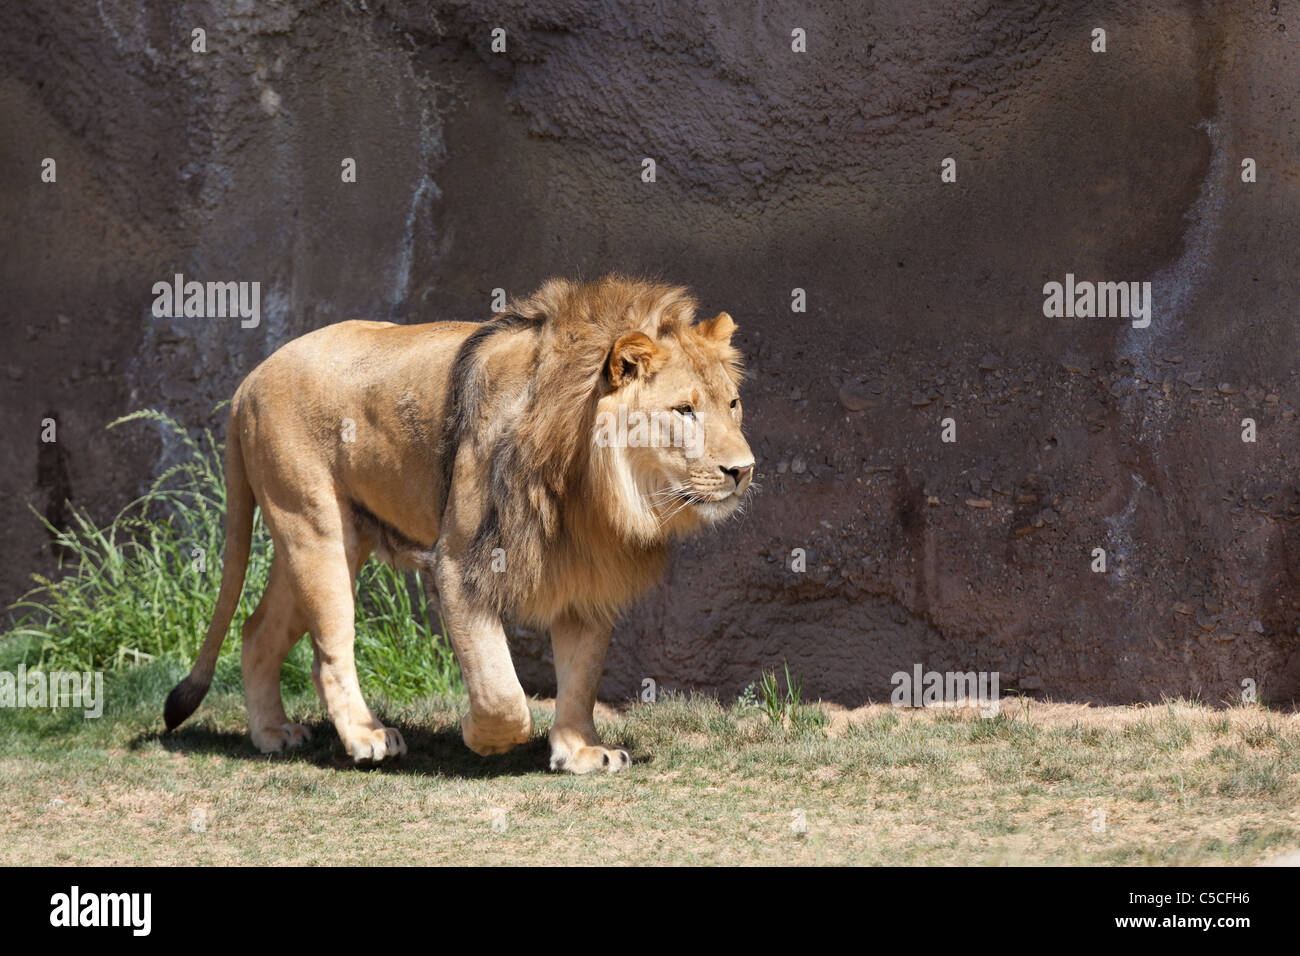 Lion walking across his zoo exhibit Stock Photo